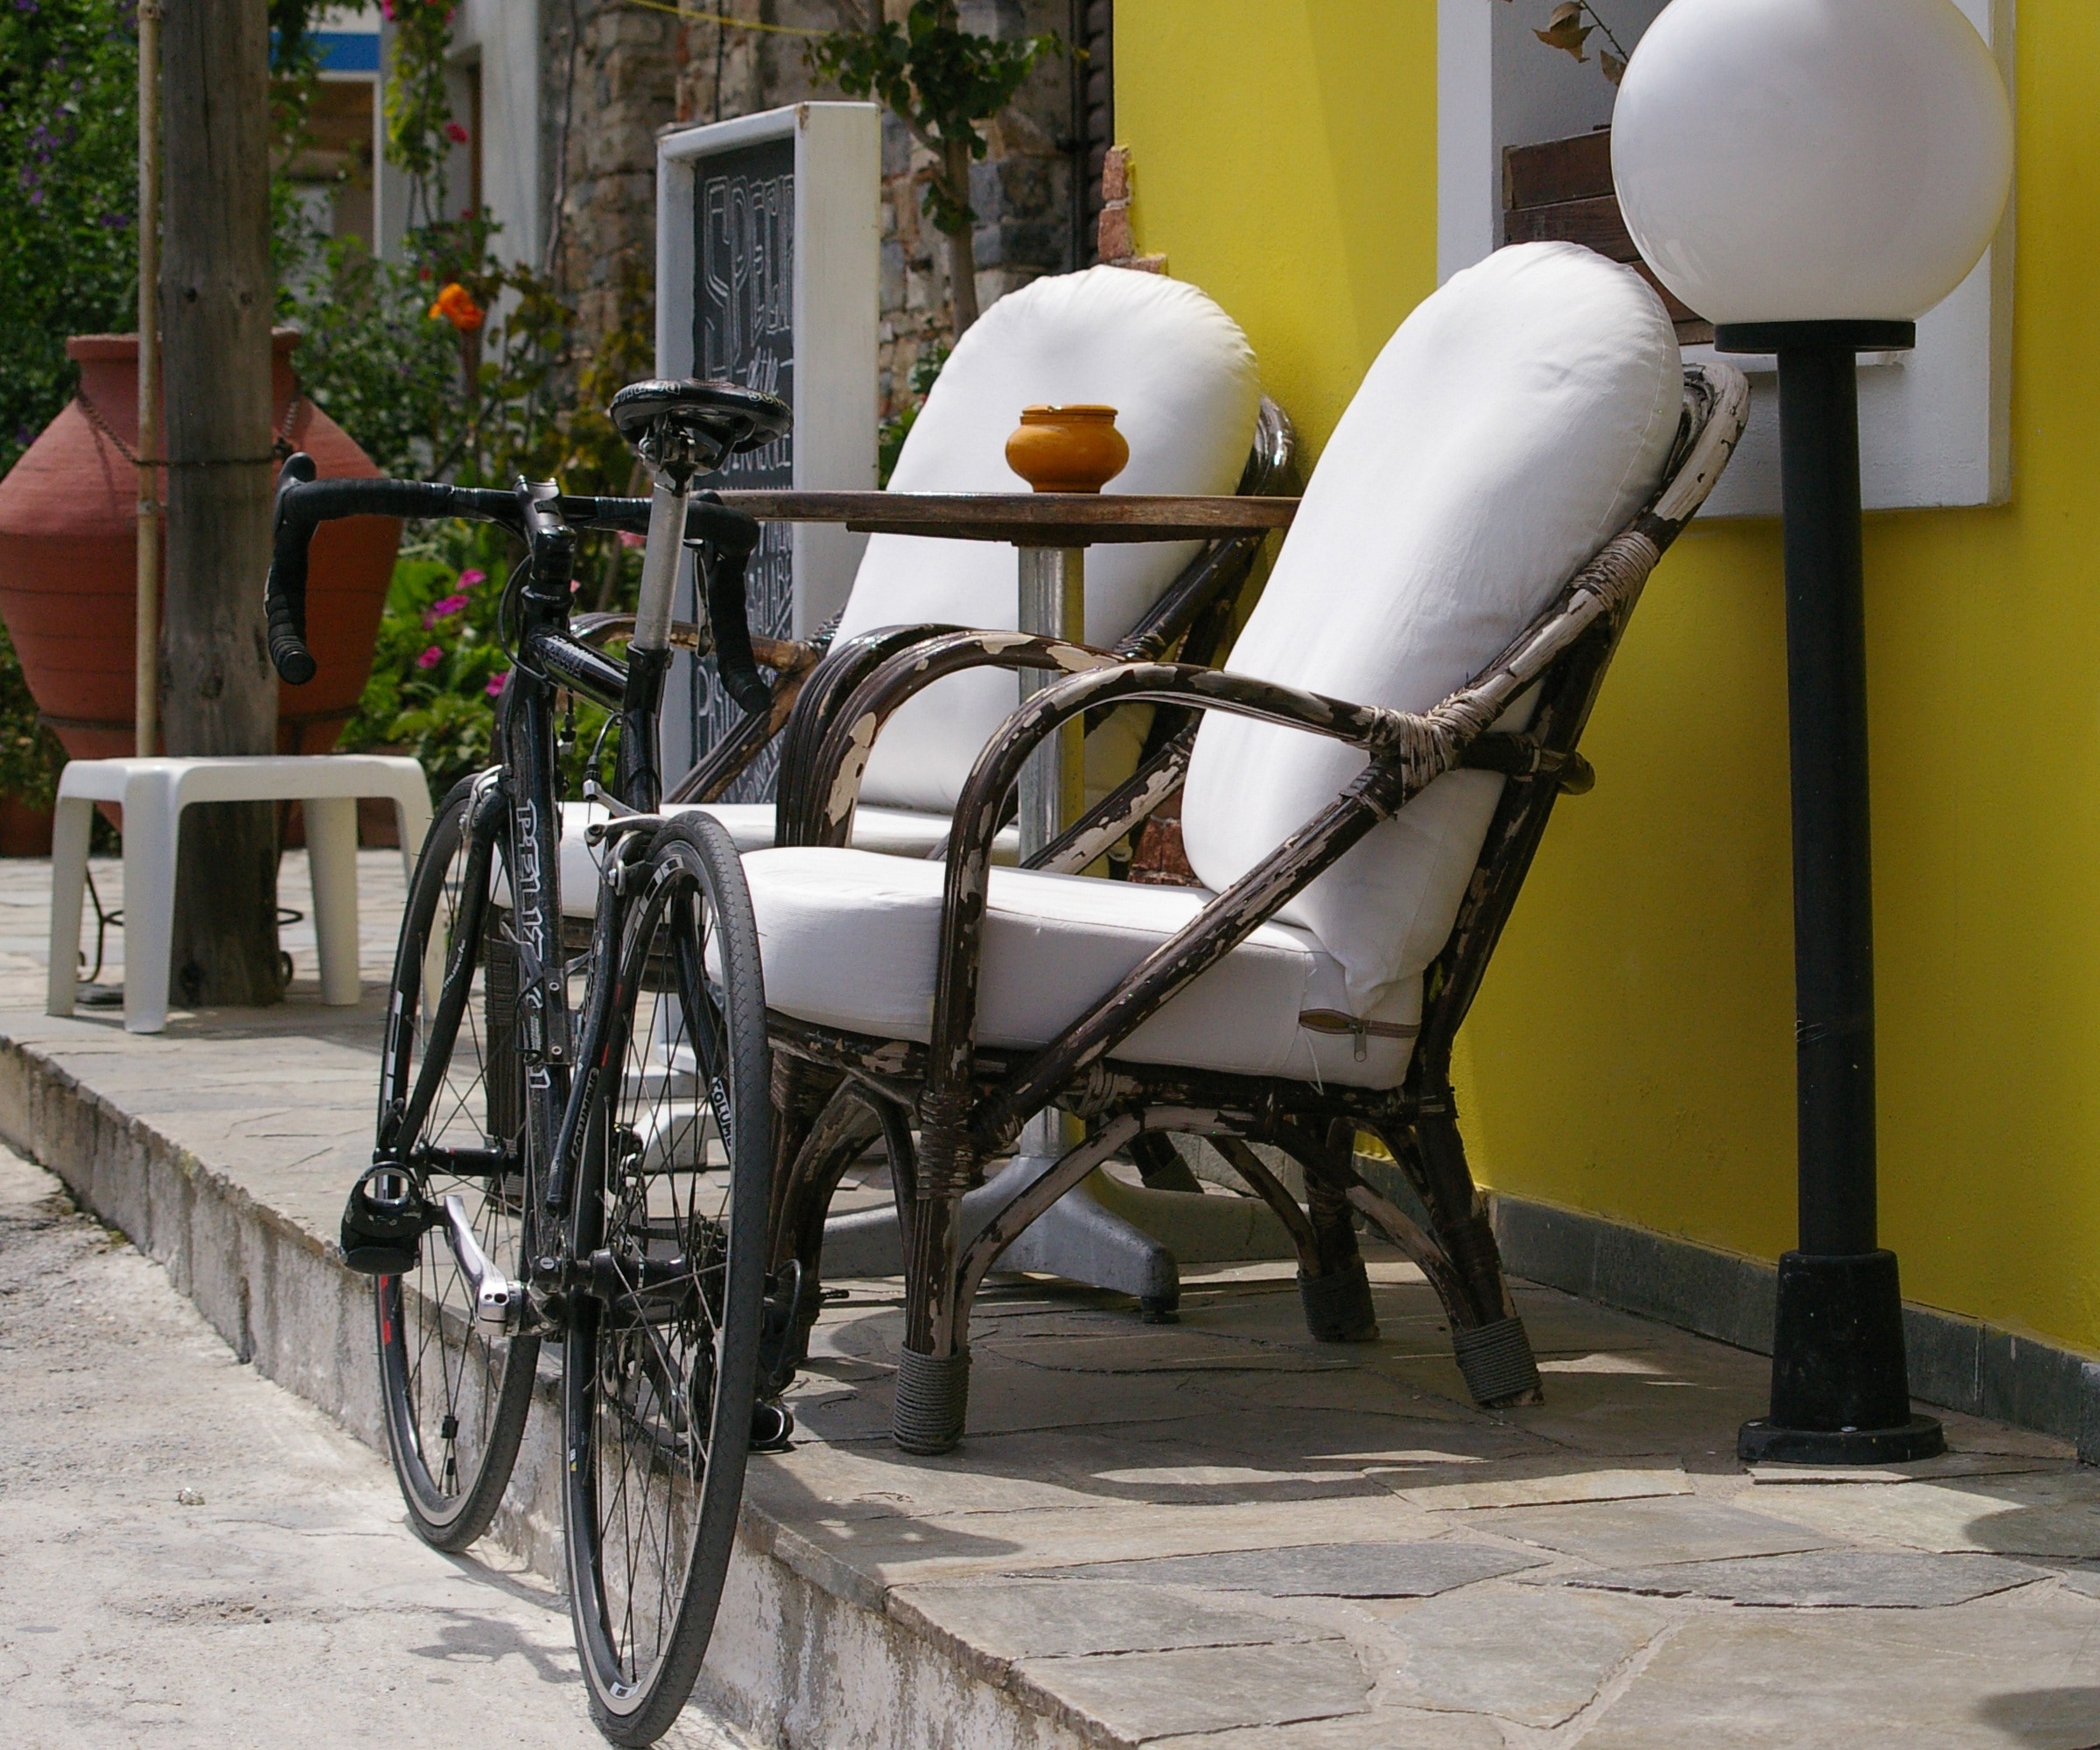 road bicycle beside armchair on sidewalk during daytime